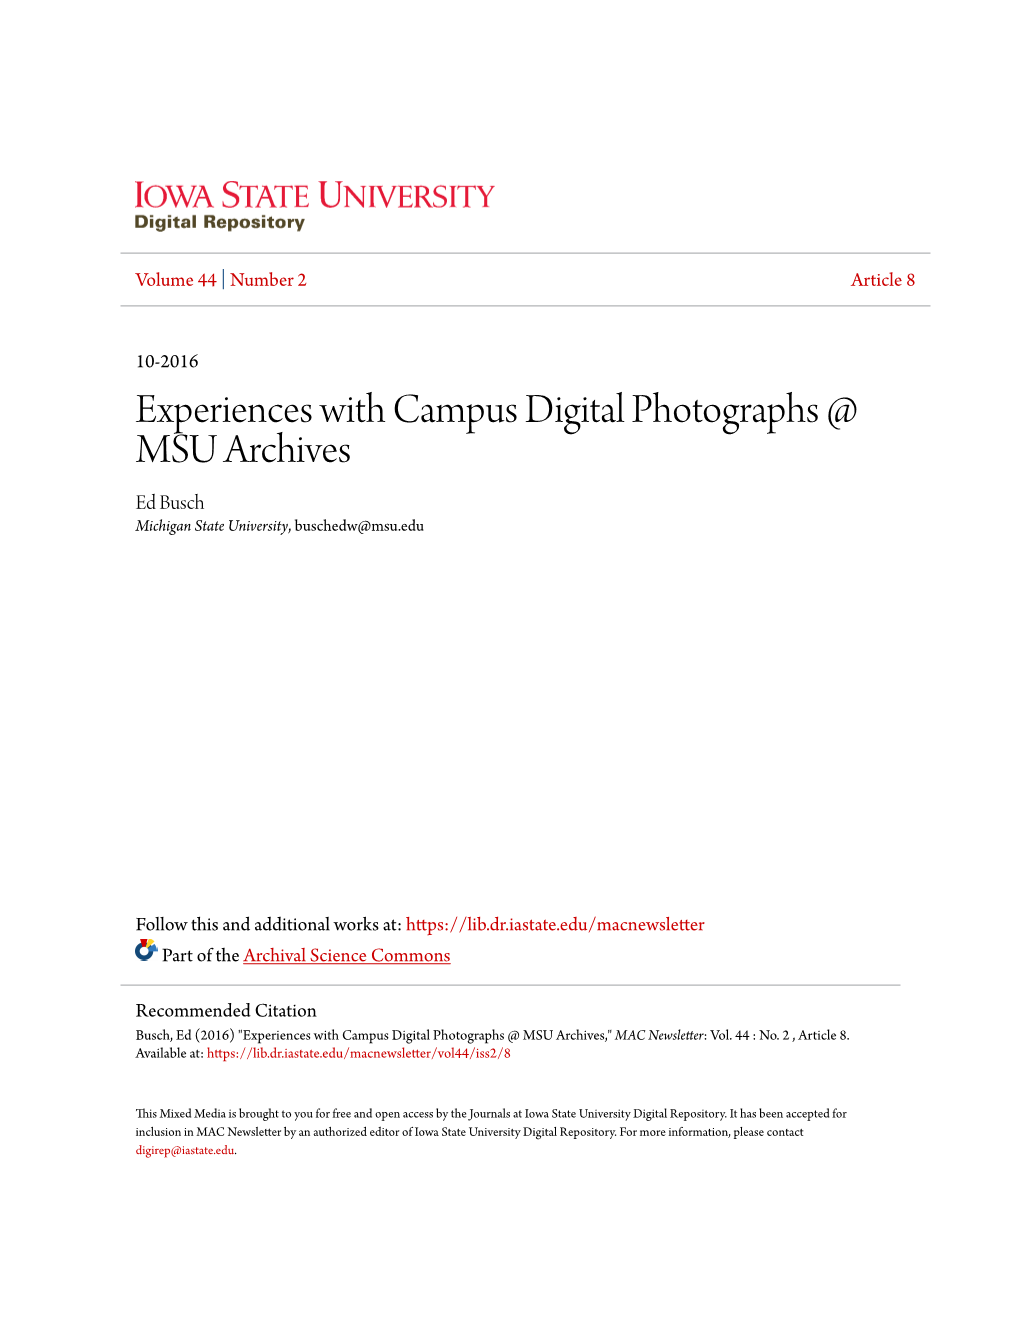 Experiences with Campus Digital Photographs @ MSU Archives Ed Busch Michigan State University, Buschedw@Msu.Edu